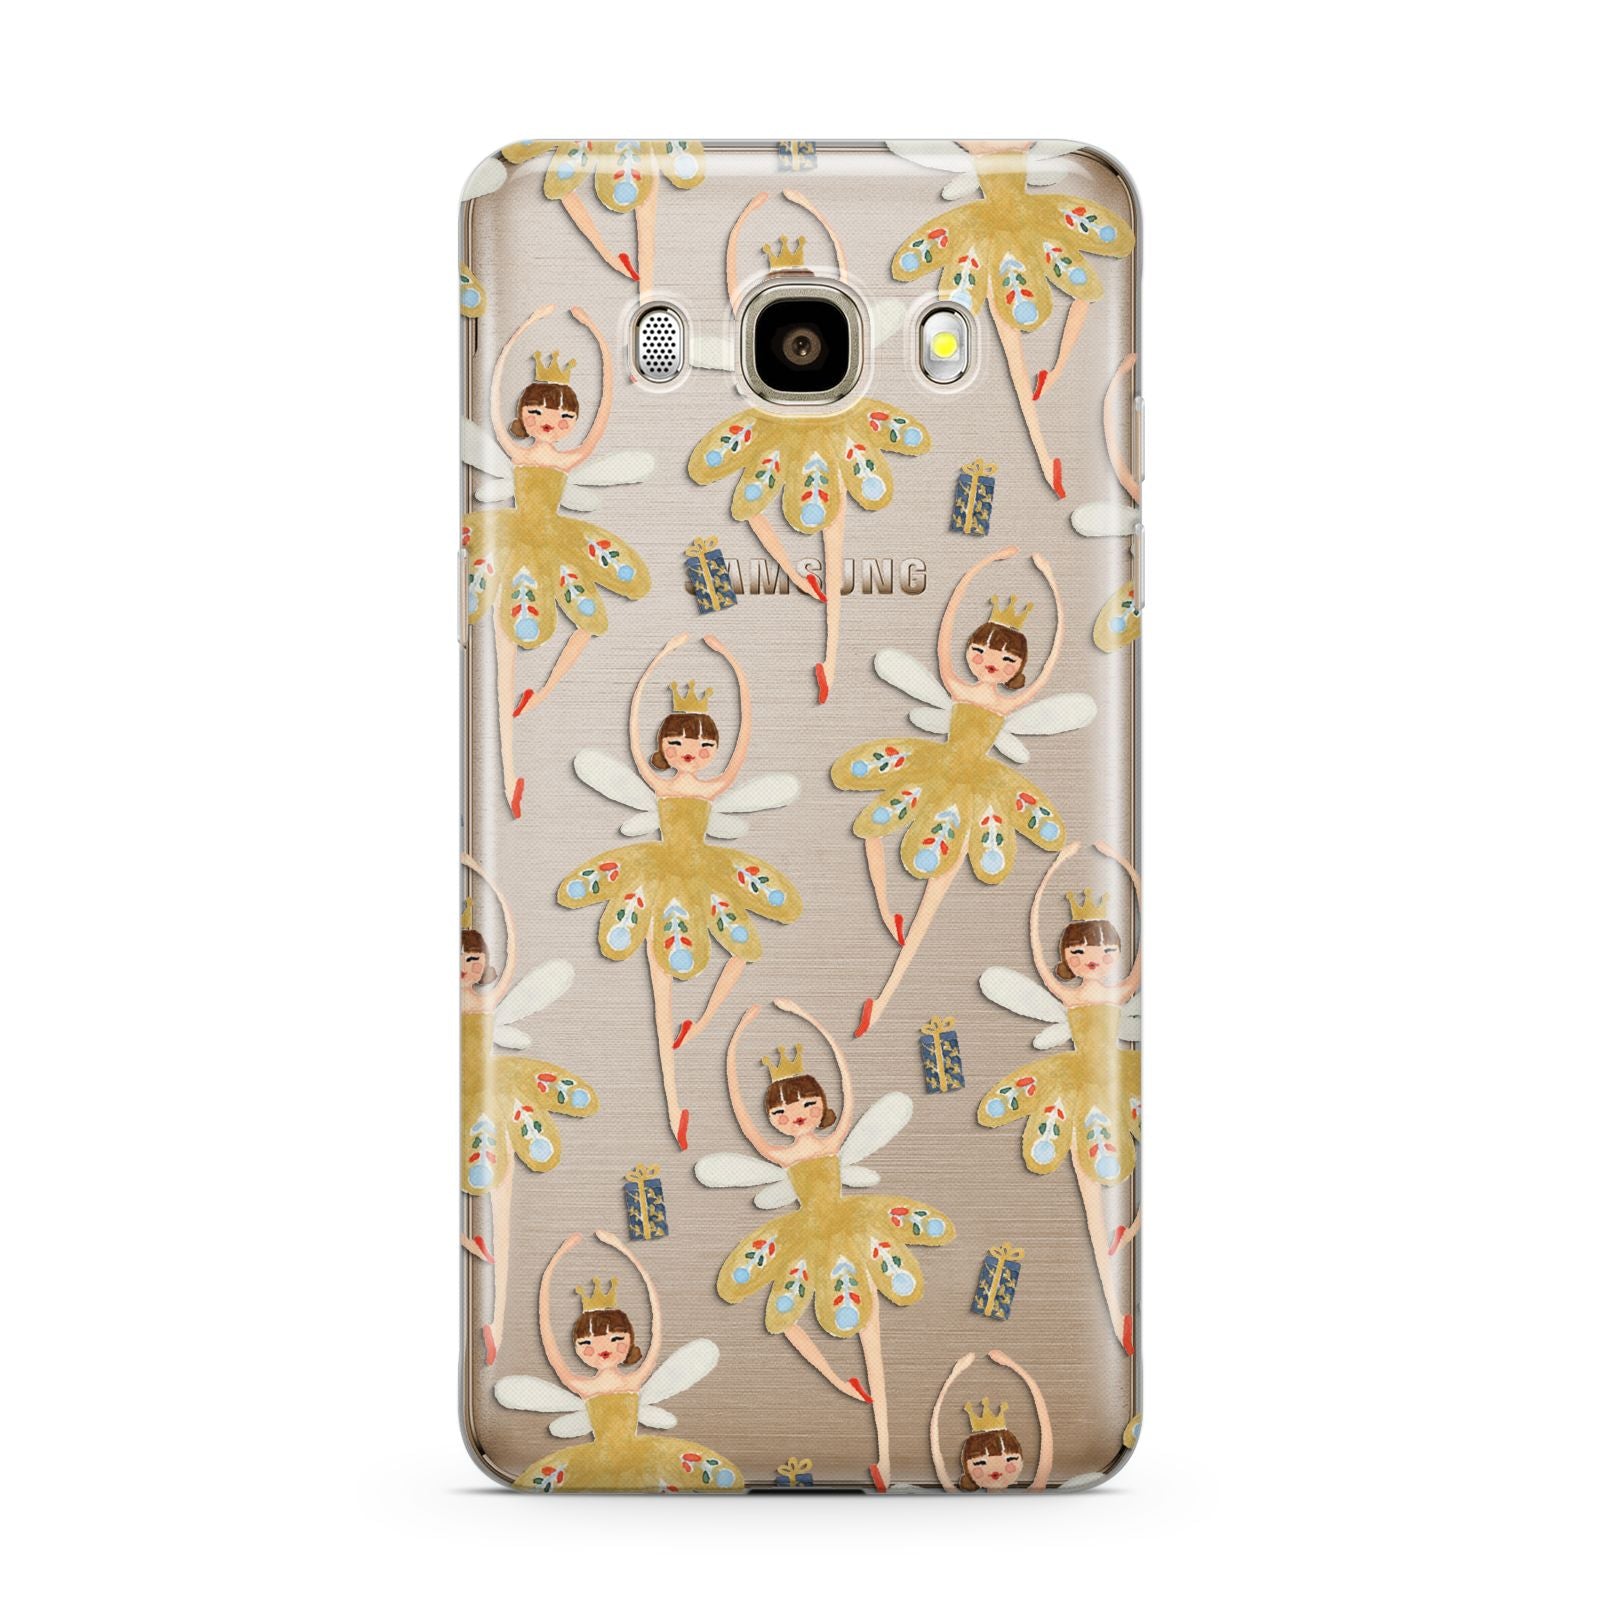 Dancing ballerina princess Samsung Galaxy J7 2016 Case on gold phone